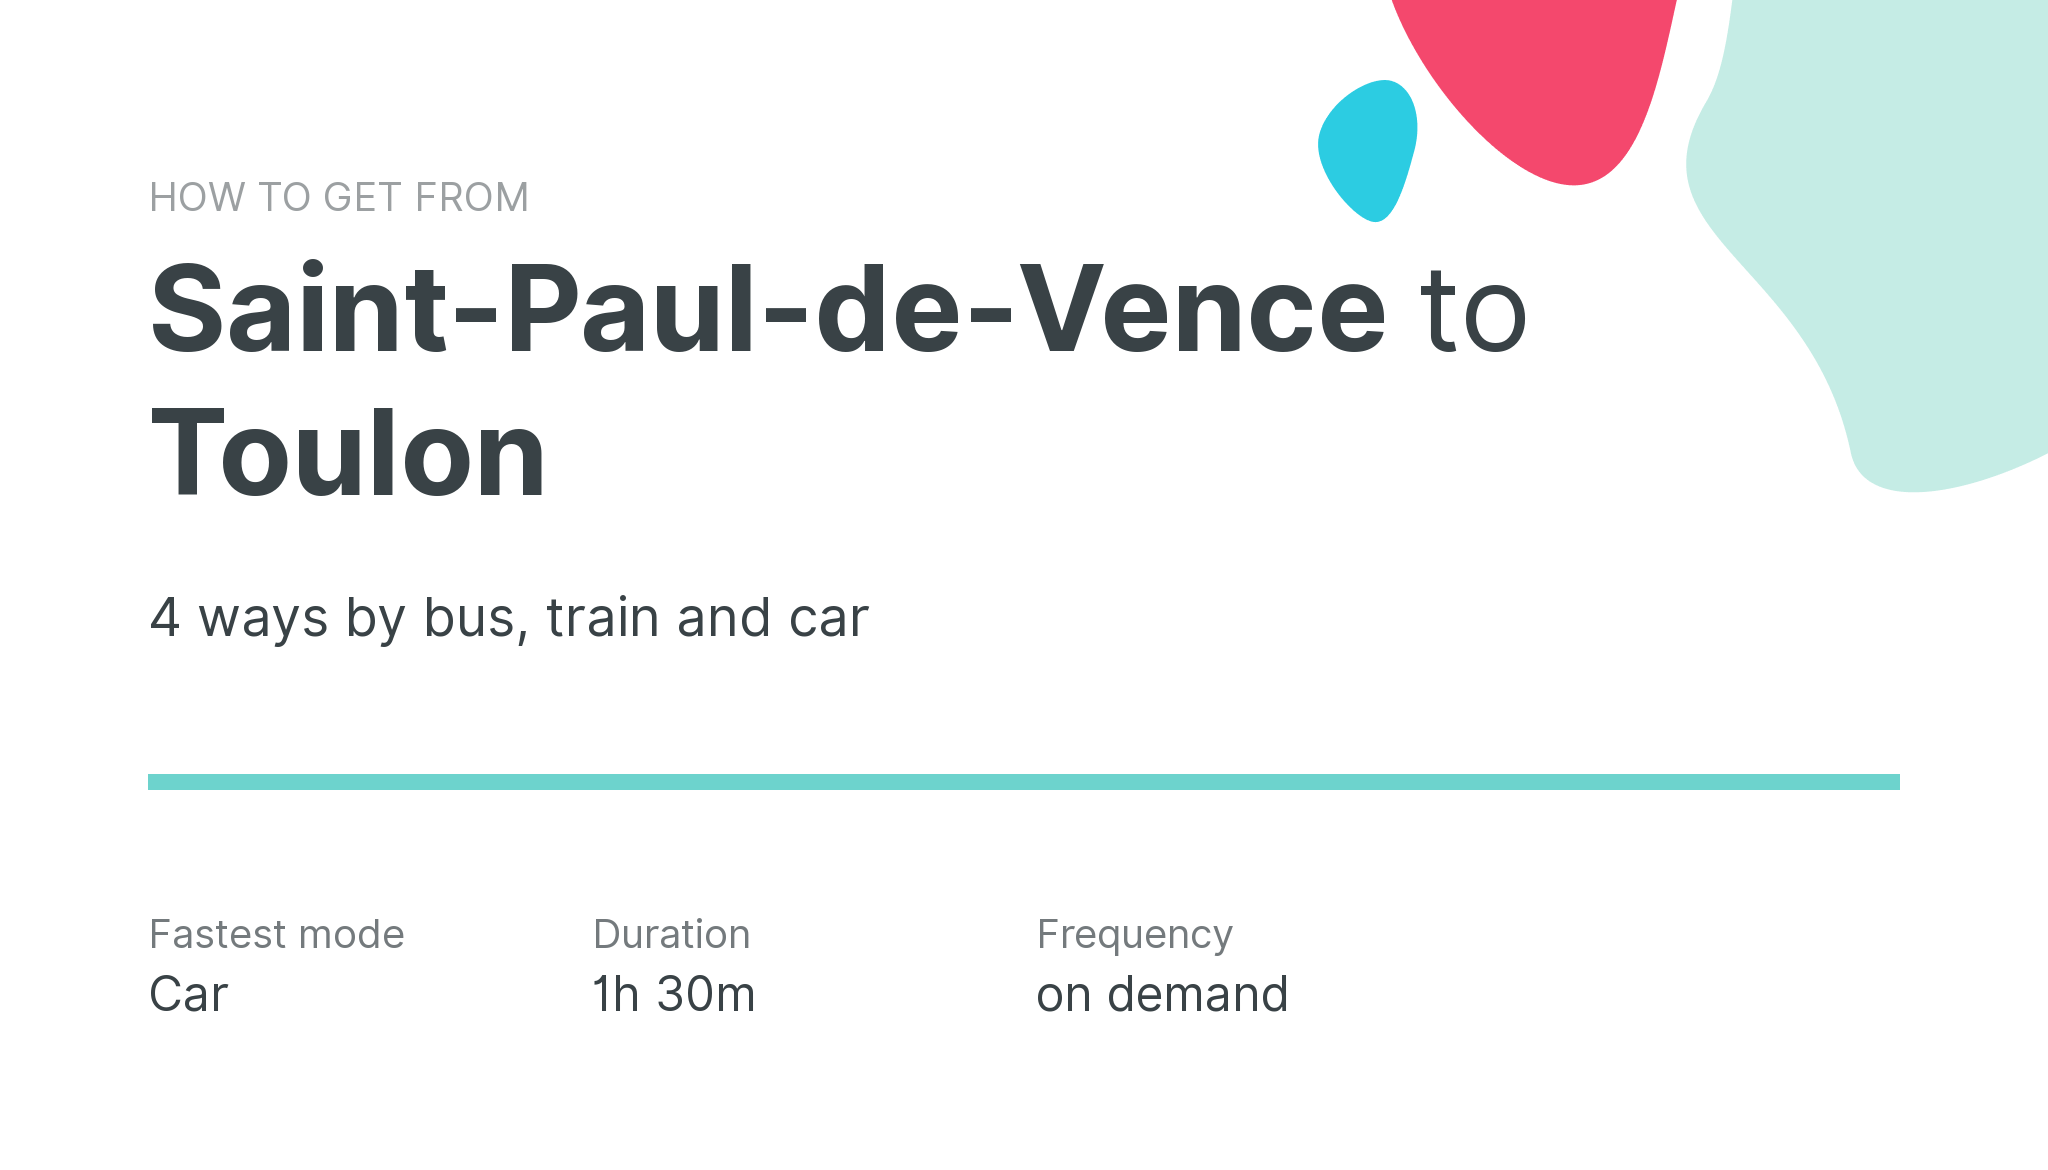 How do I get from Saint-Paul-de-Vence to Toulon